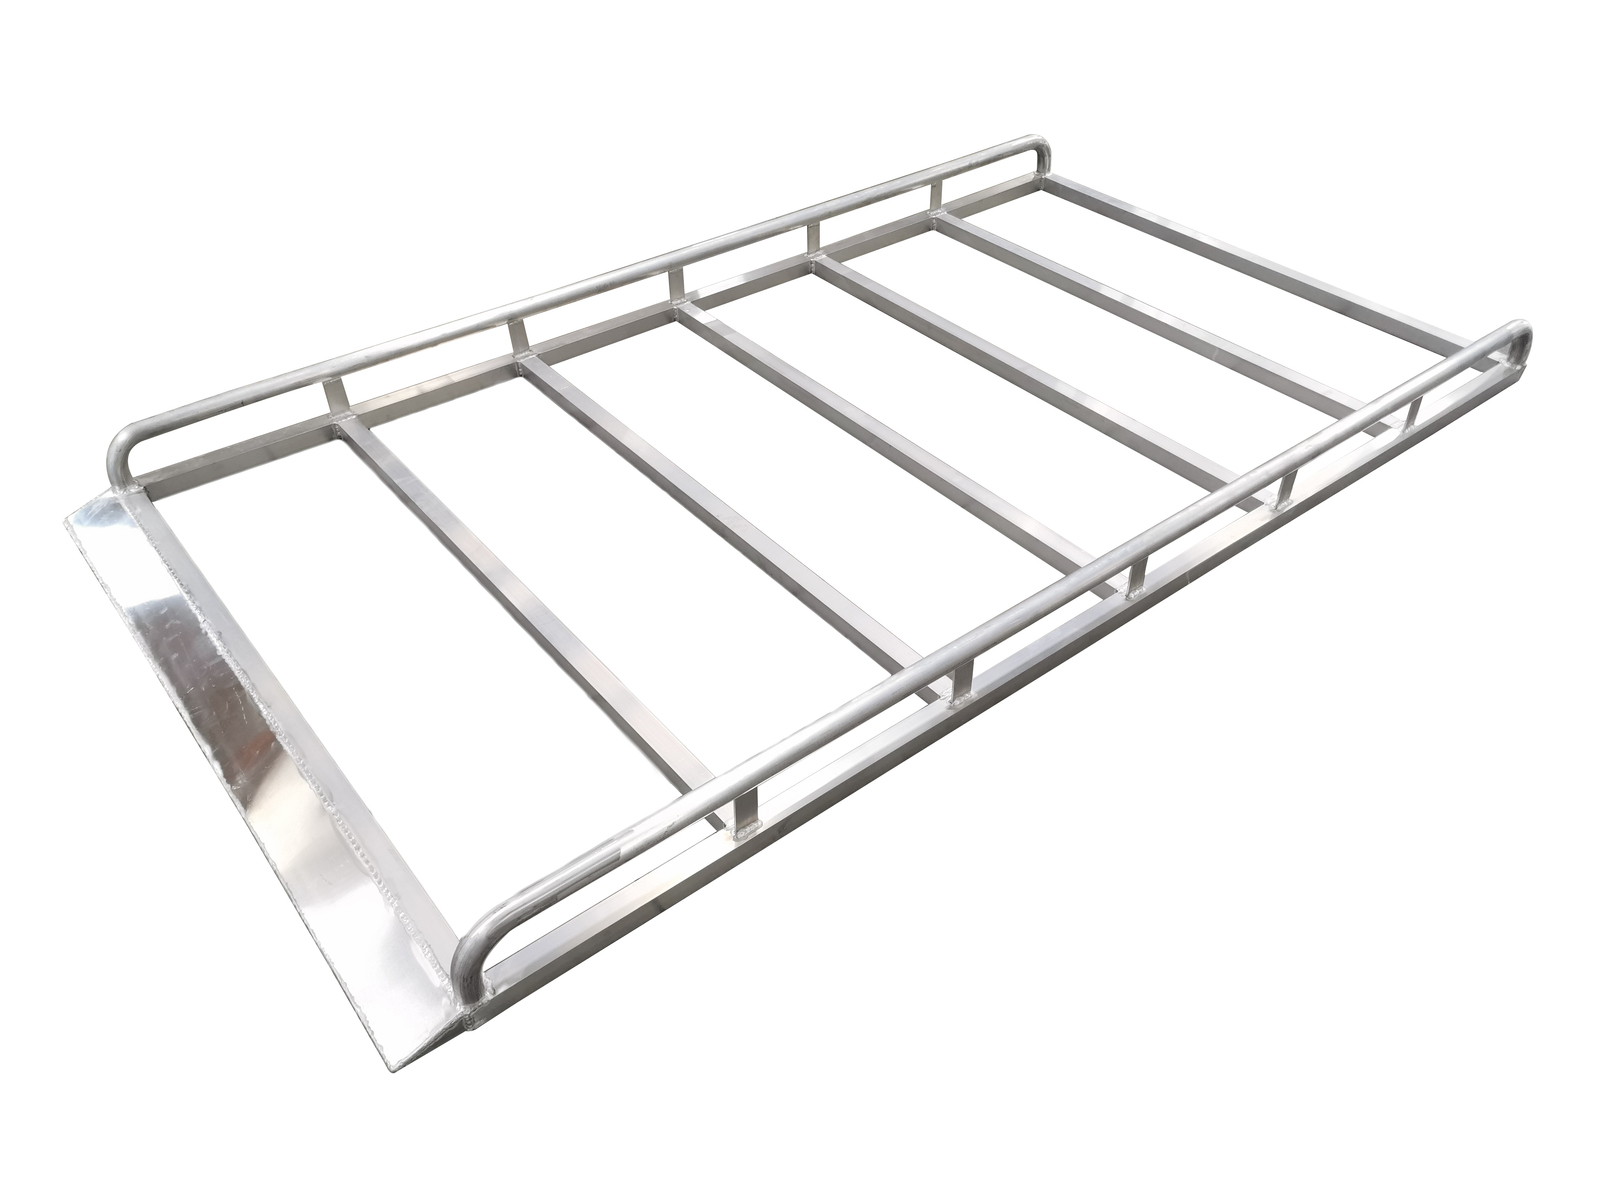 Buy Aluminium Full Roof Rack 1.8m x 1.4m with Wind Deflector Online